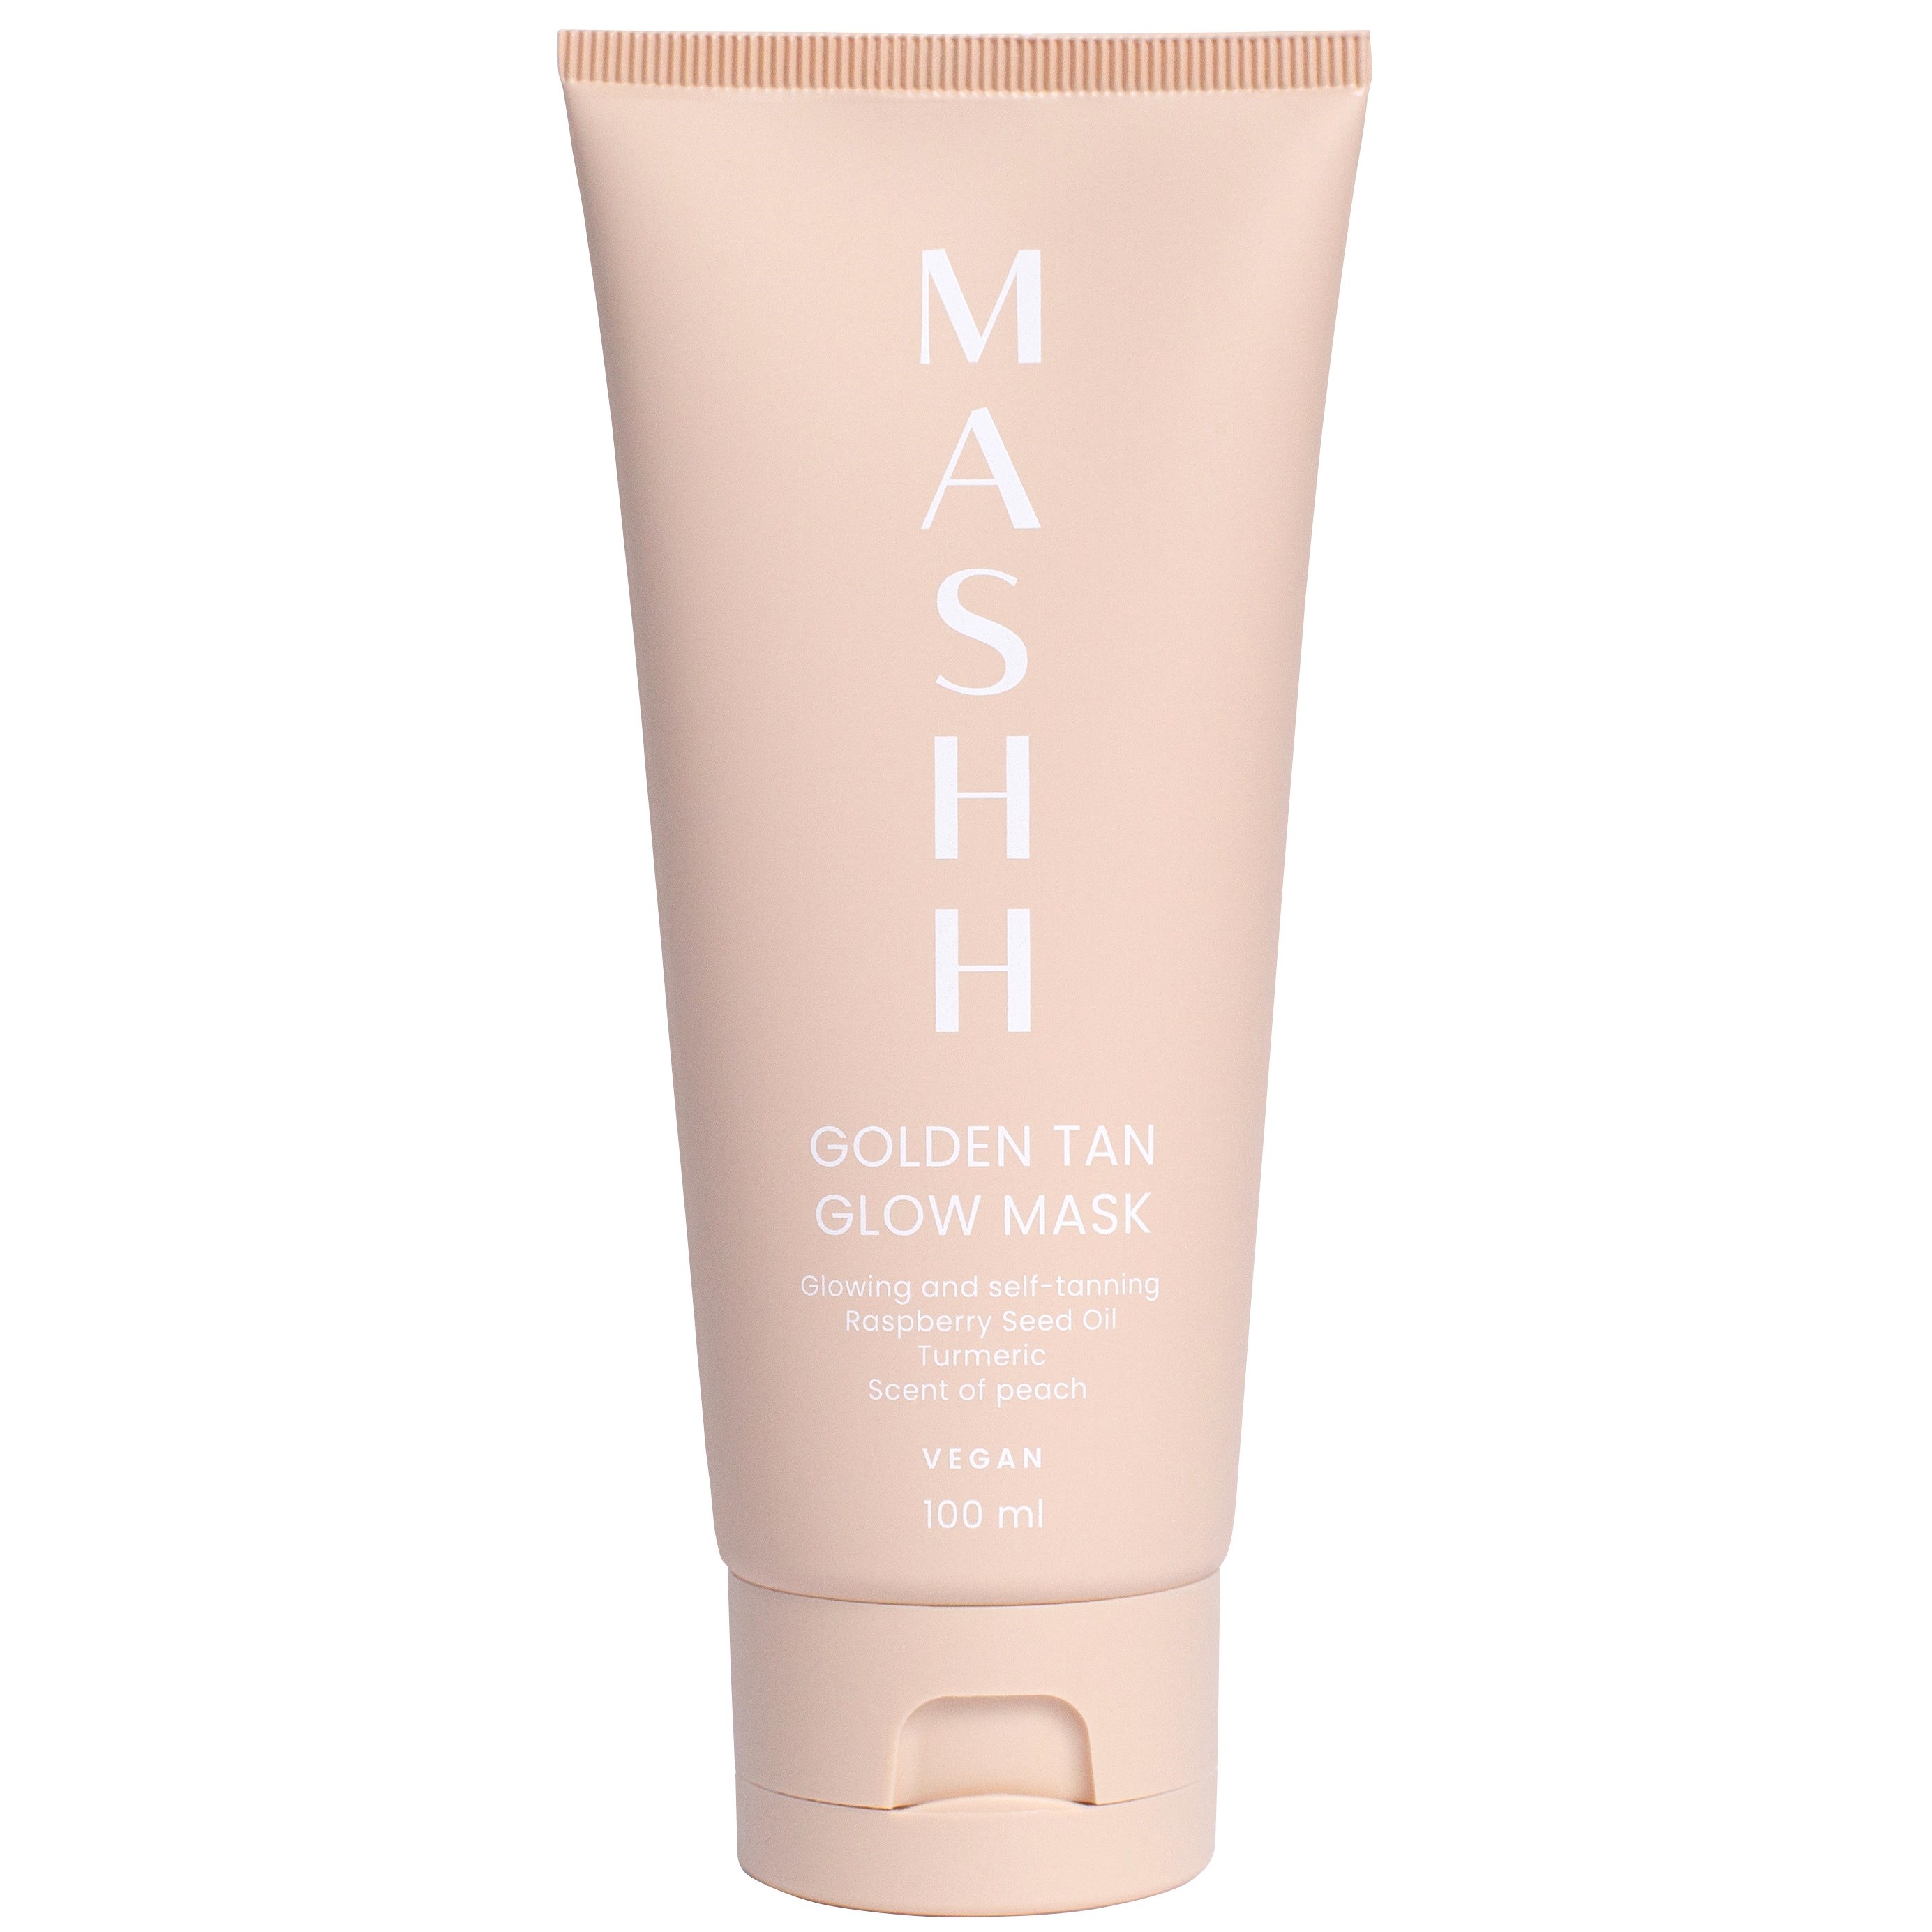 MASHH Golden Tan Glow Mask 100 ml